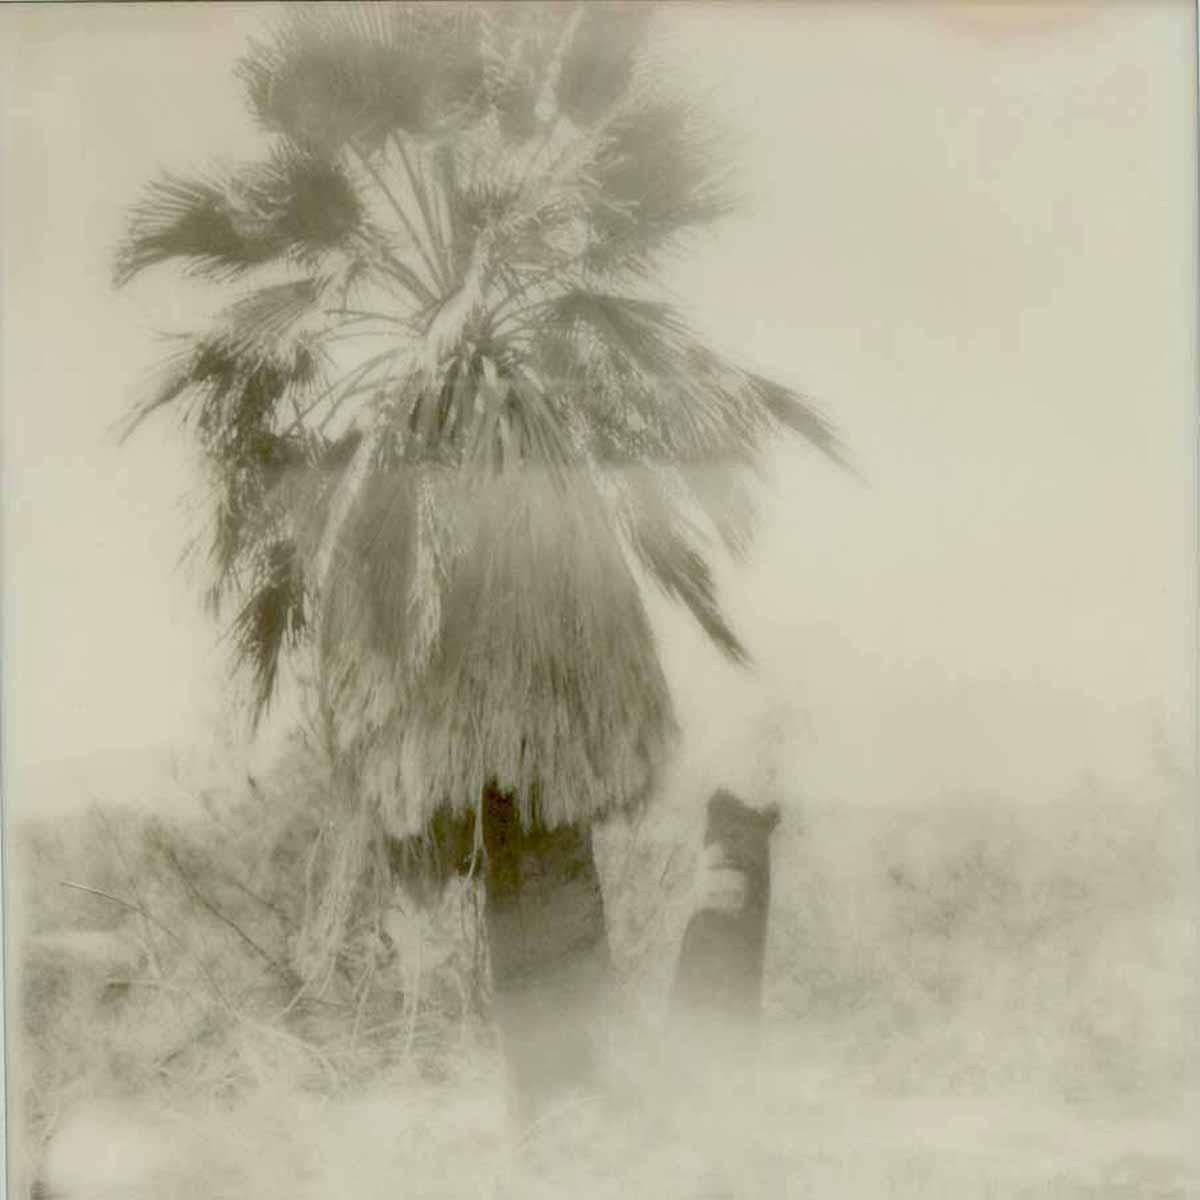 Erin Dougherty Black and White Photograph - Mexican Palm (Salton Sea) - 21st Century, Polaroid, Landscape